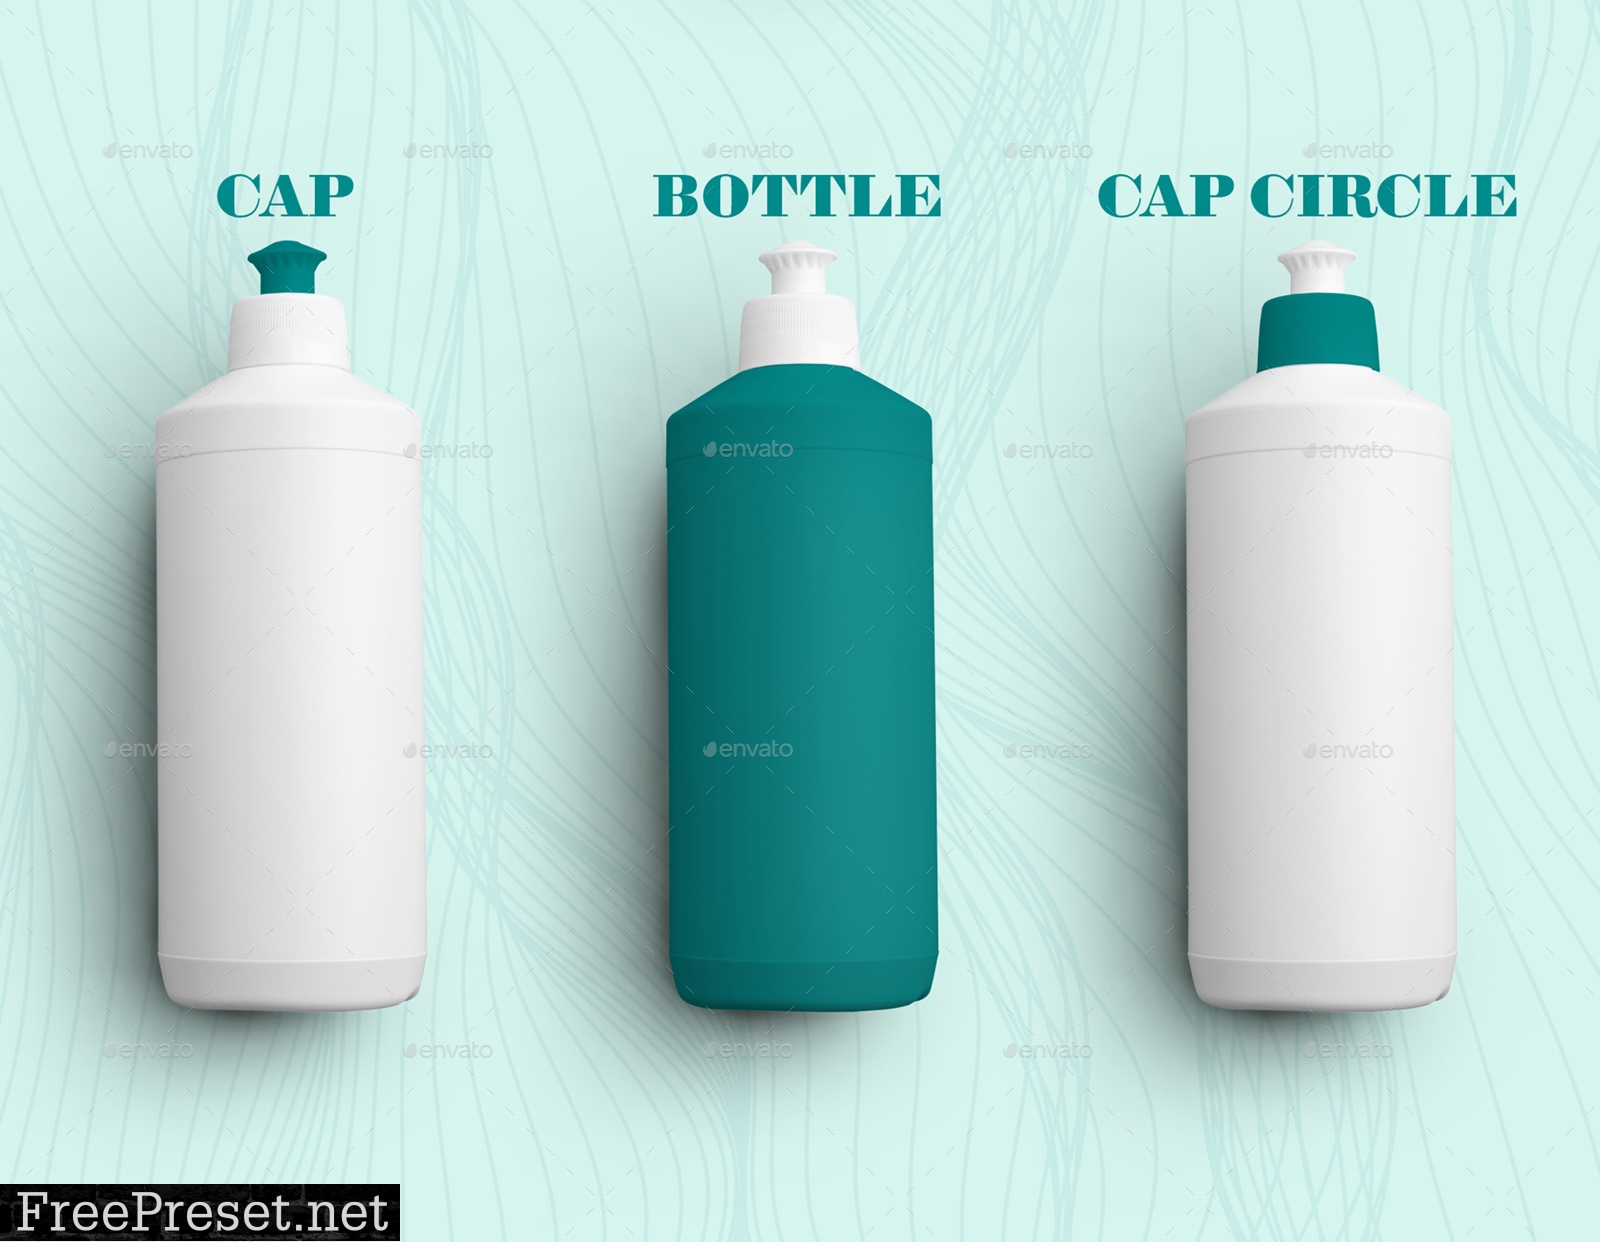 5 Mockups Plastic Bottle with Push-Pull Cap 29634508